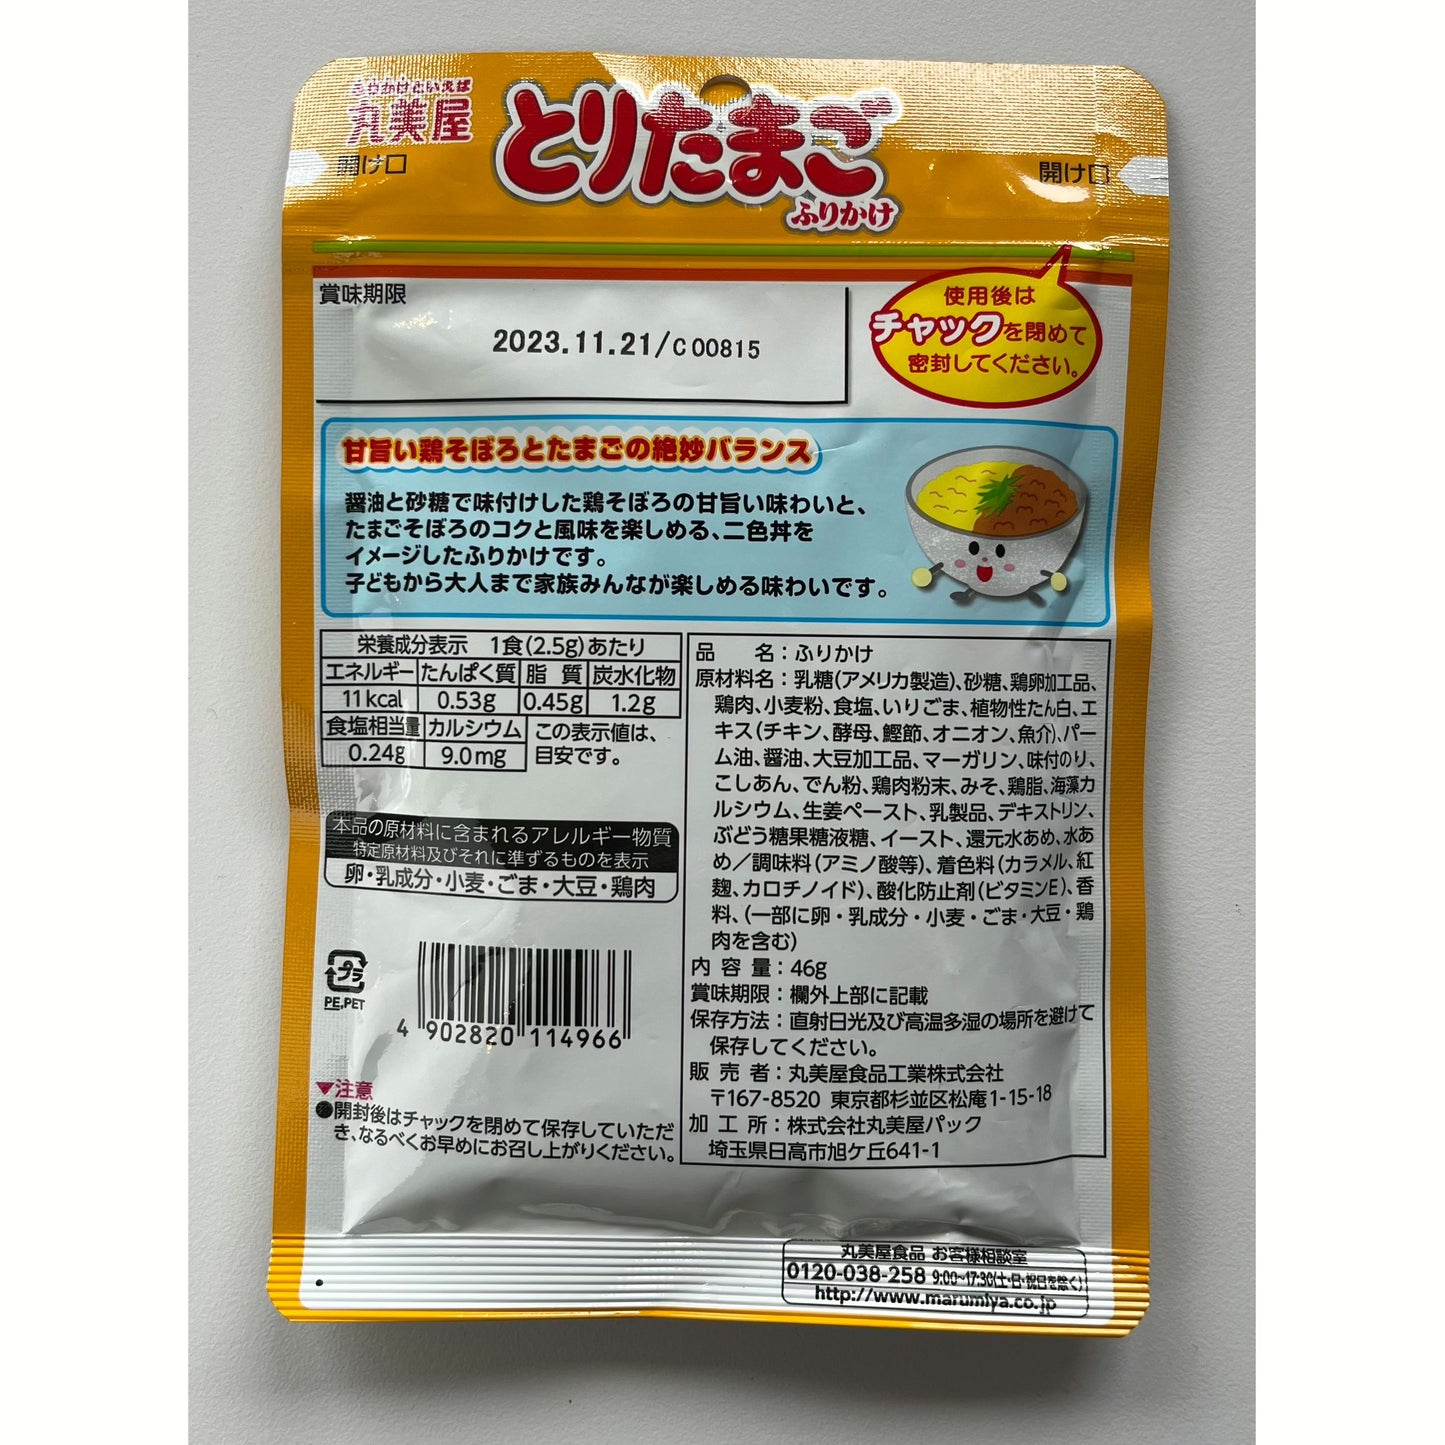 Marumiya Chicken & Egg "Tori Tamago" Furikake